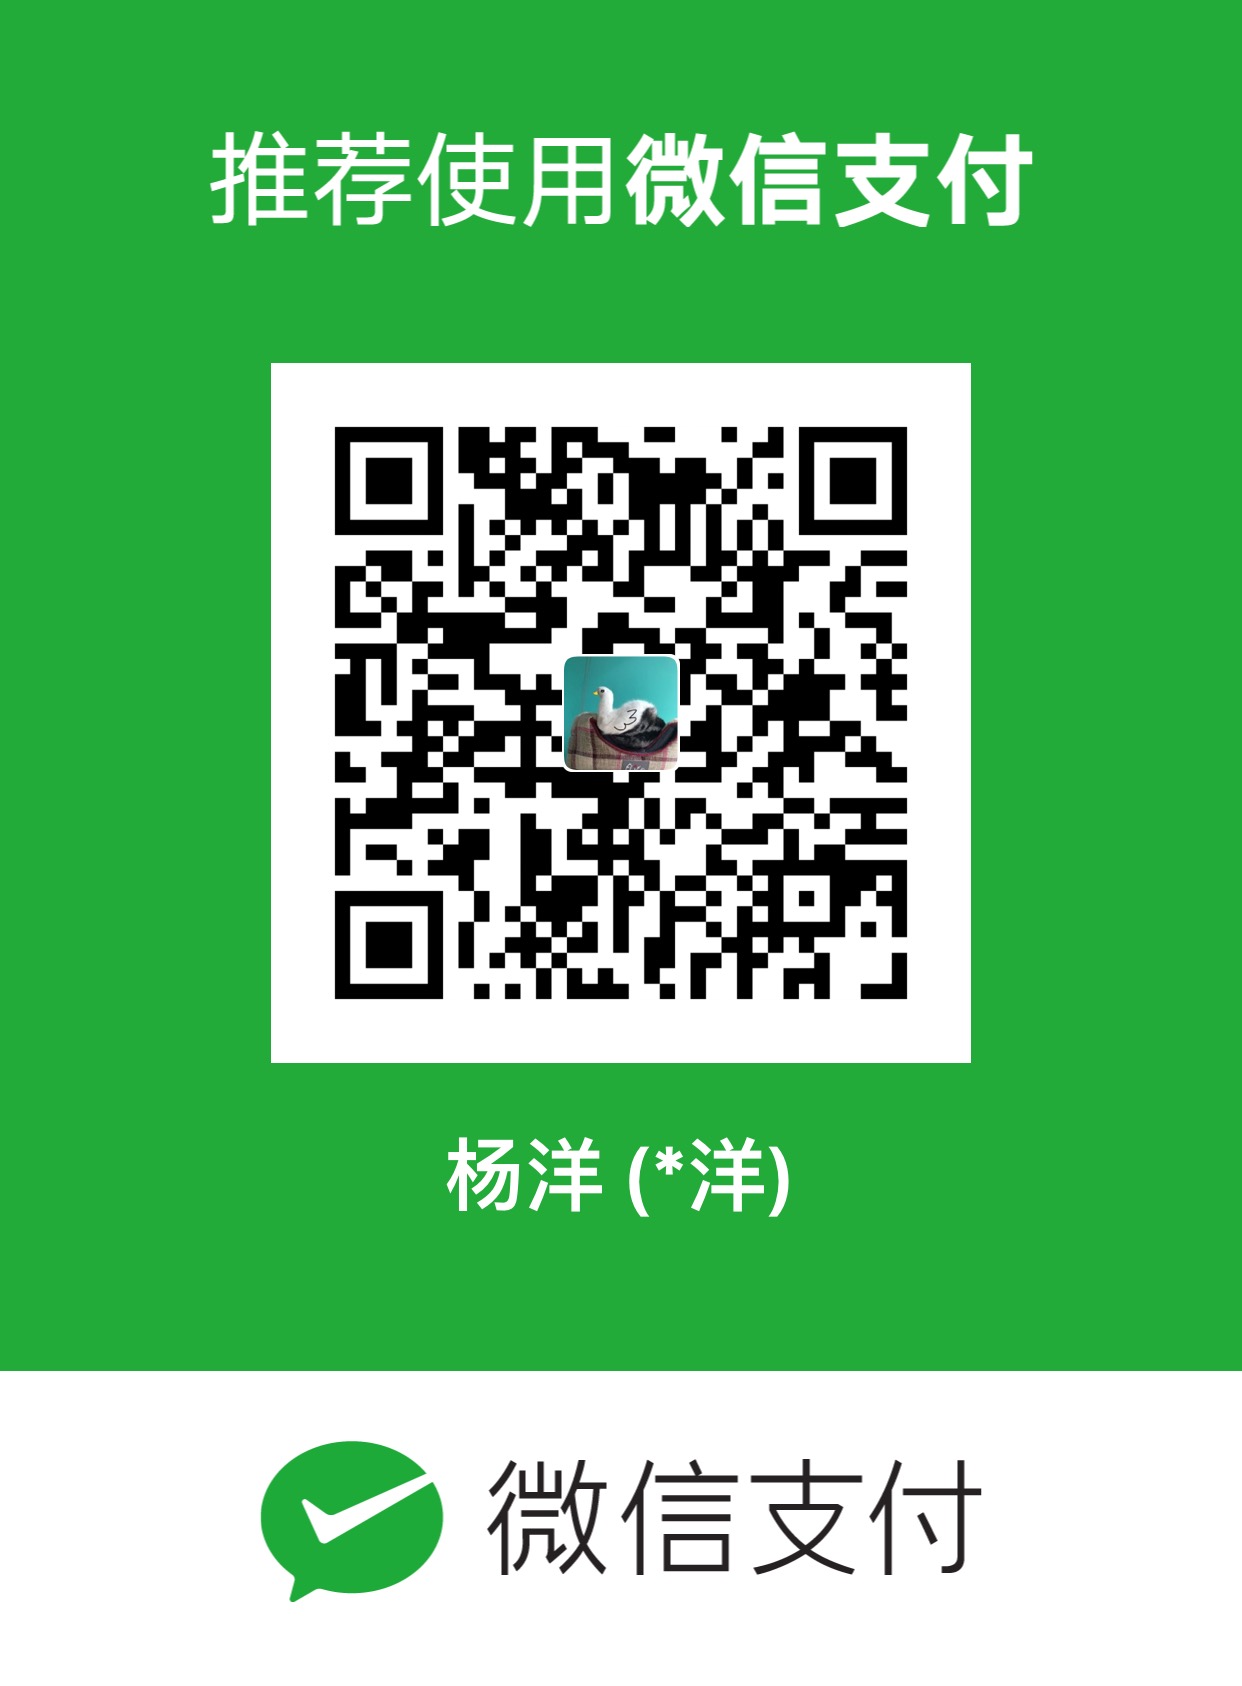 yyny1789 WeChat Pay